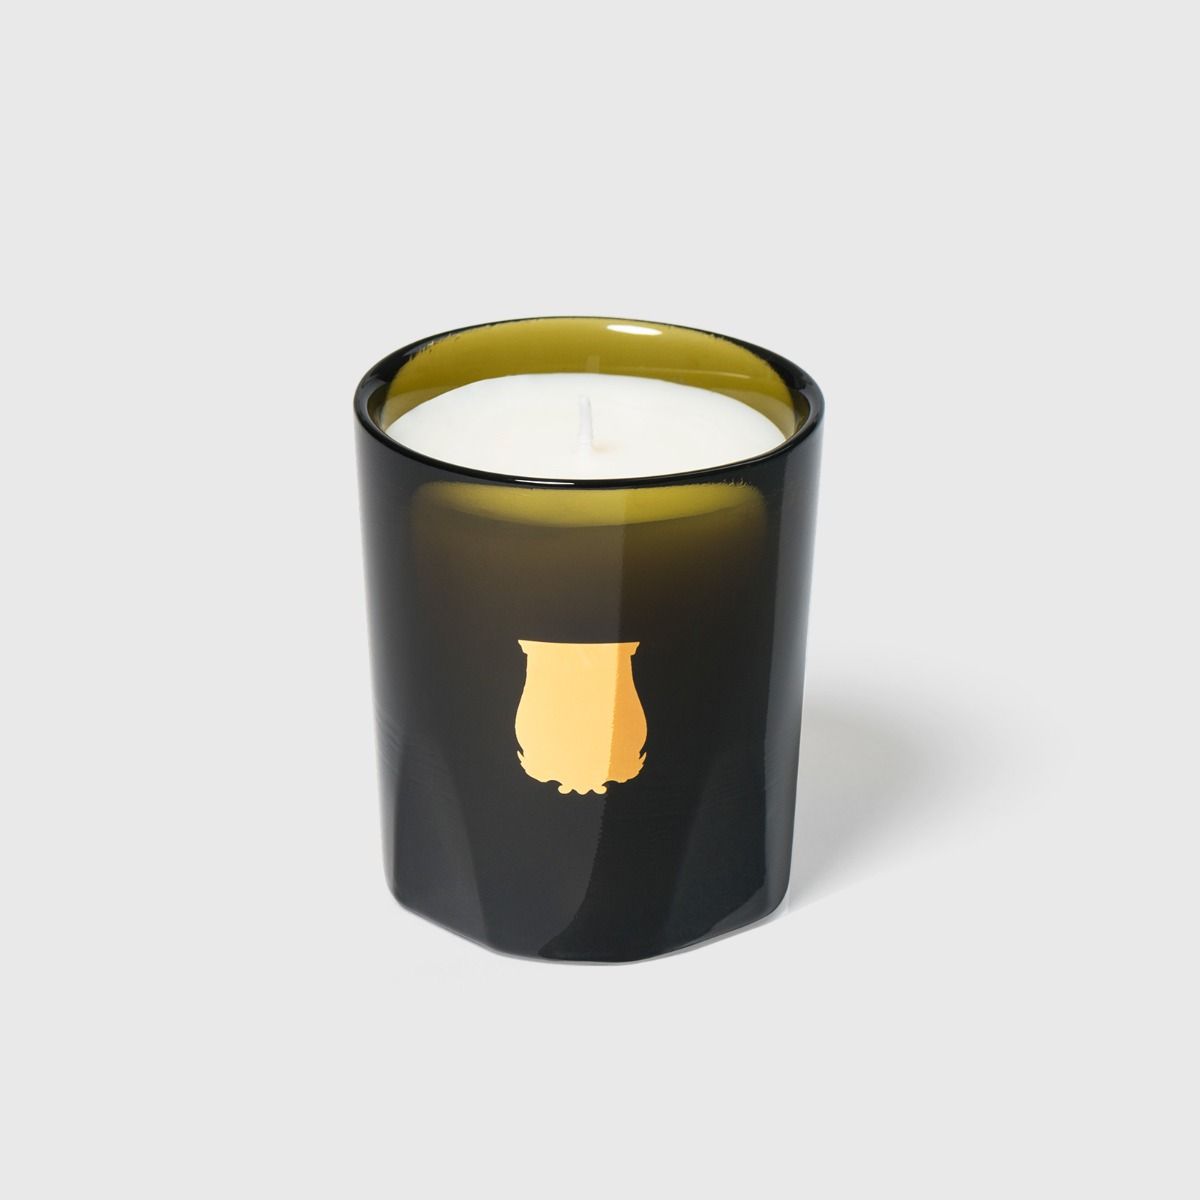 Trudon | Odalisque Scented Candles (Orange Blossom)